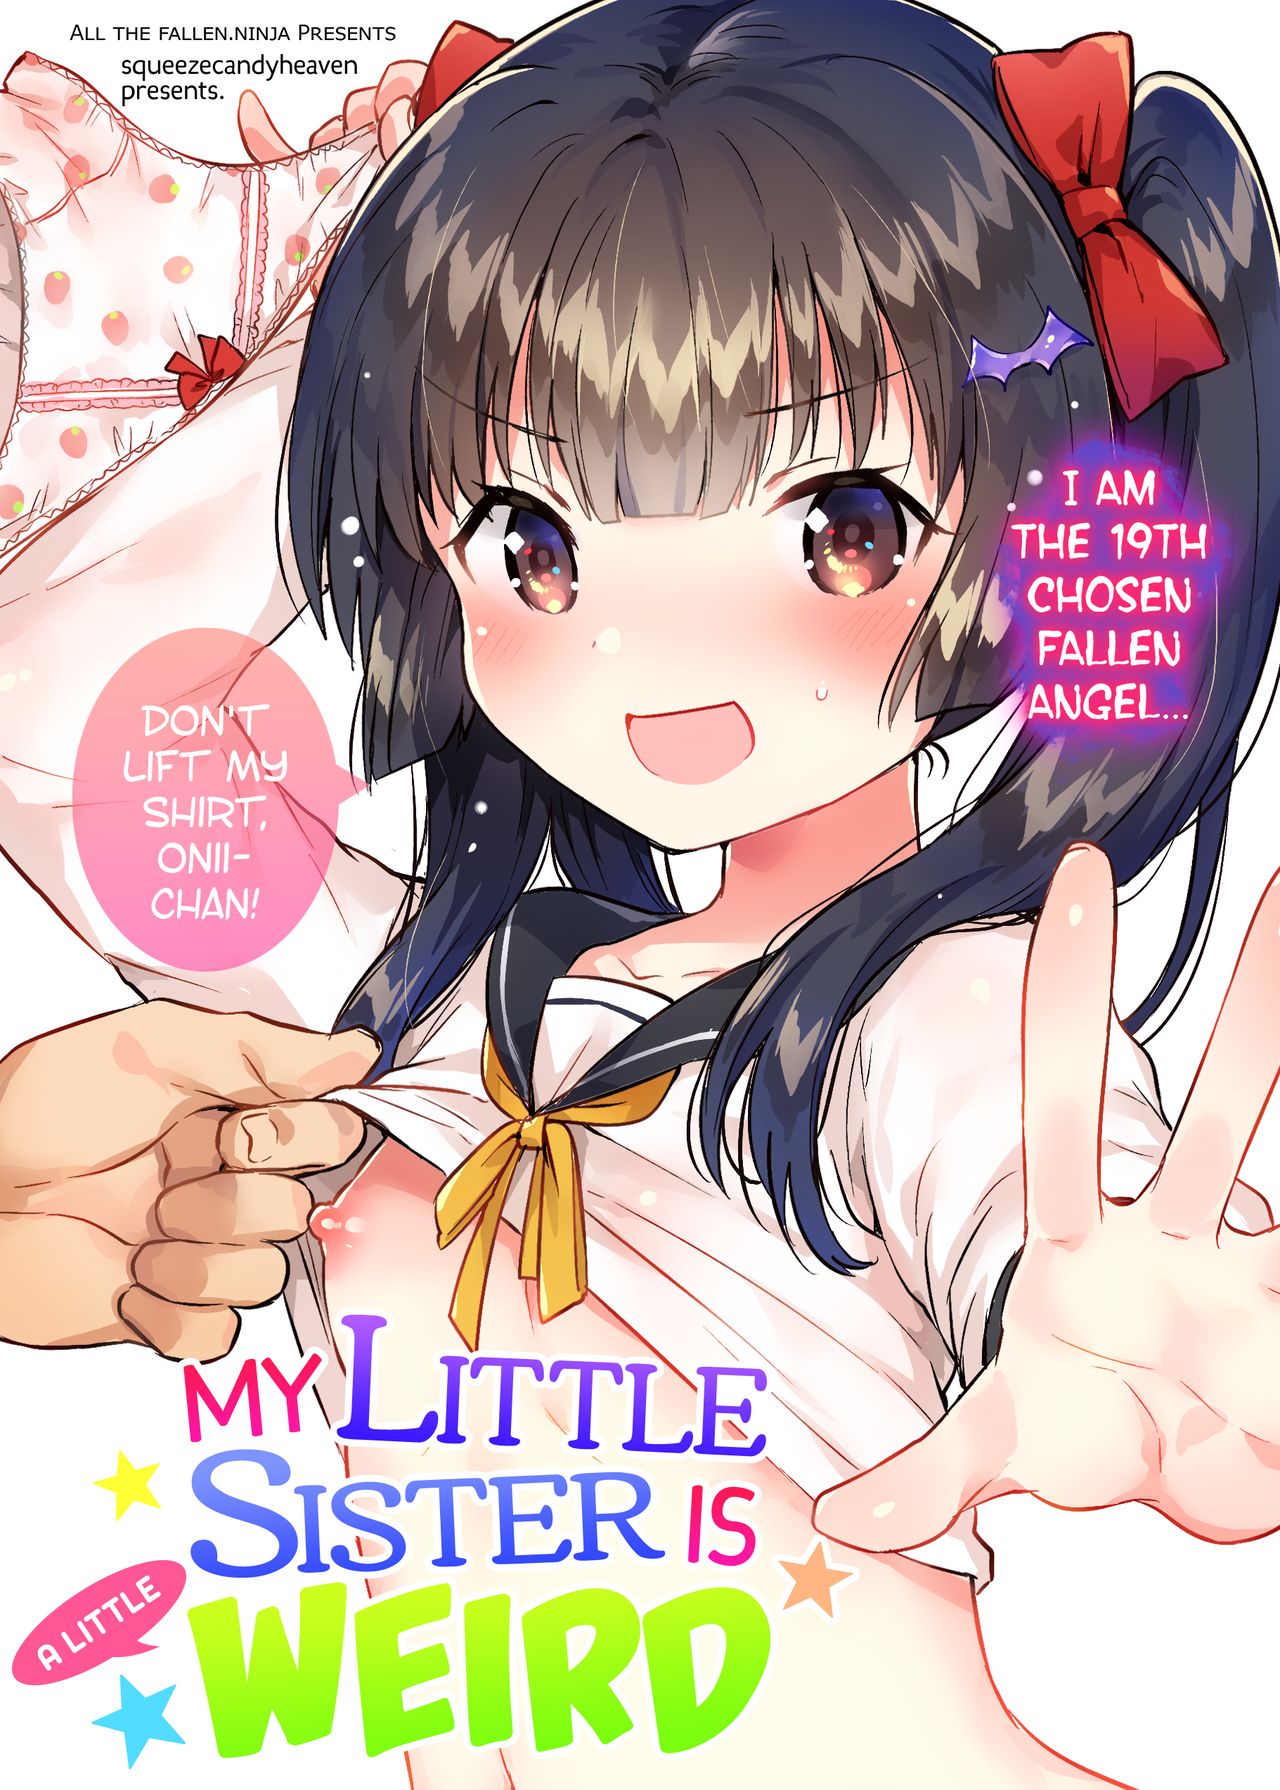 Imouto wa Chotto Atama ga Okashii + Omake | My Little Sister Is a Little  Weird + Bonus Story - Page 1 - HentaiRox